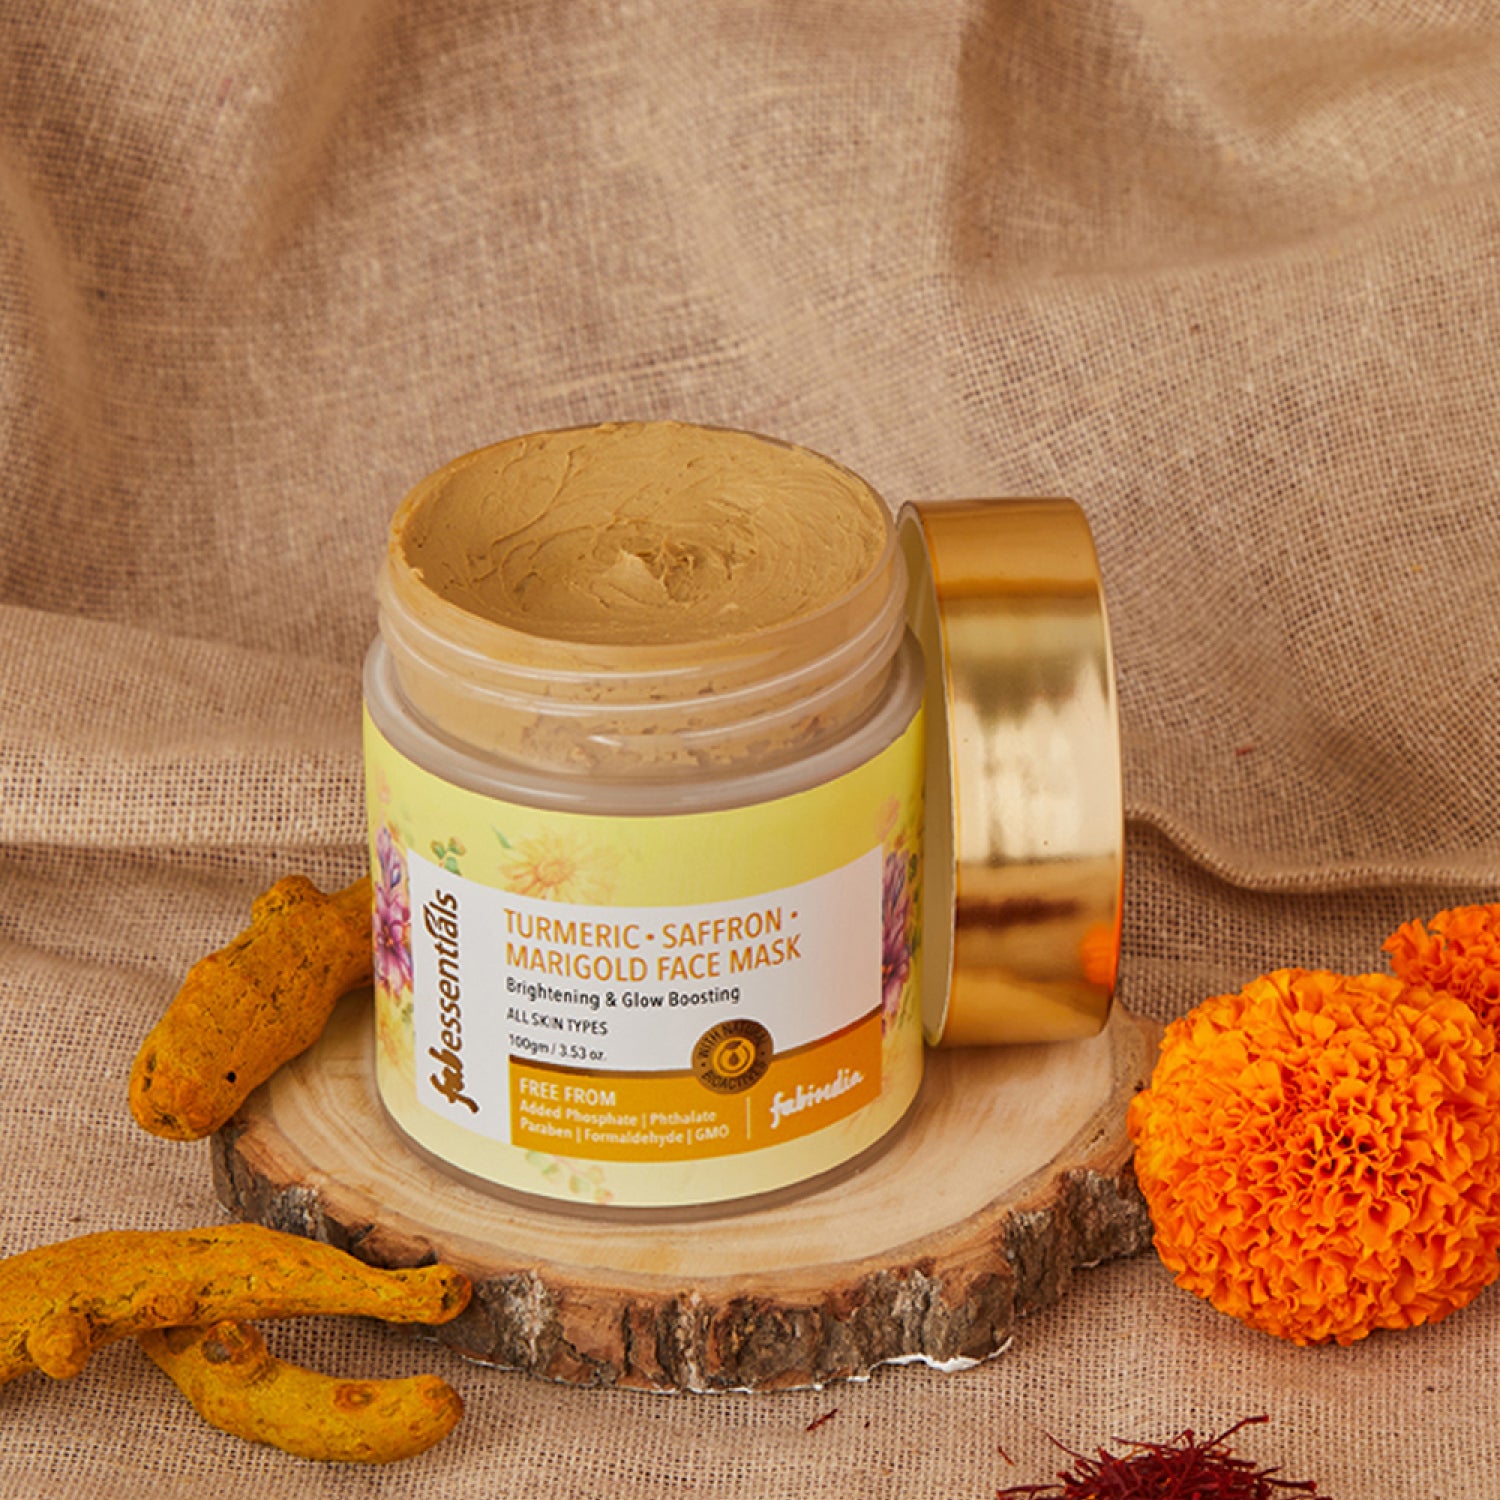 Turmeric Saffron Marigold Face Mask - 100 gm